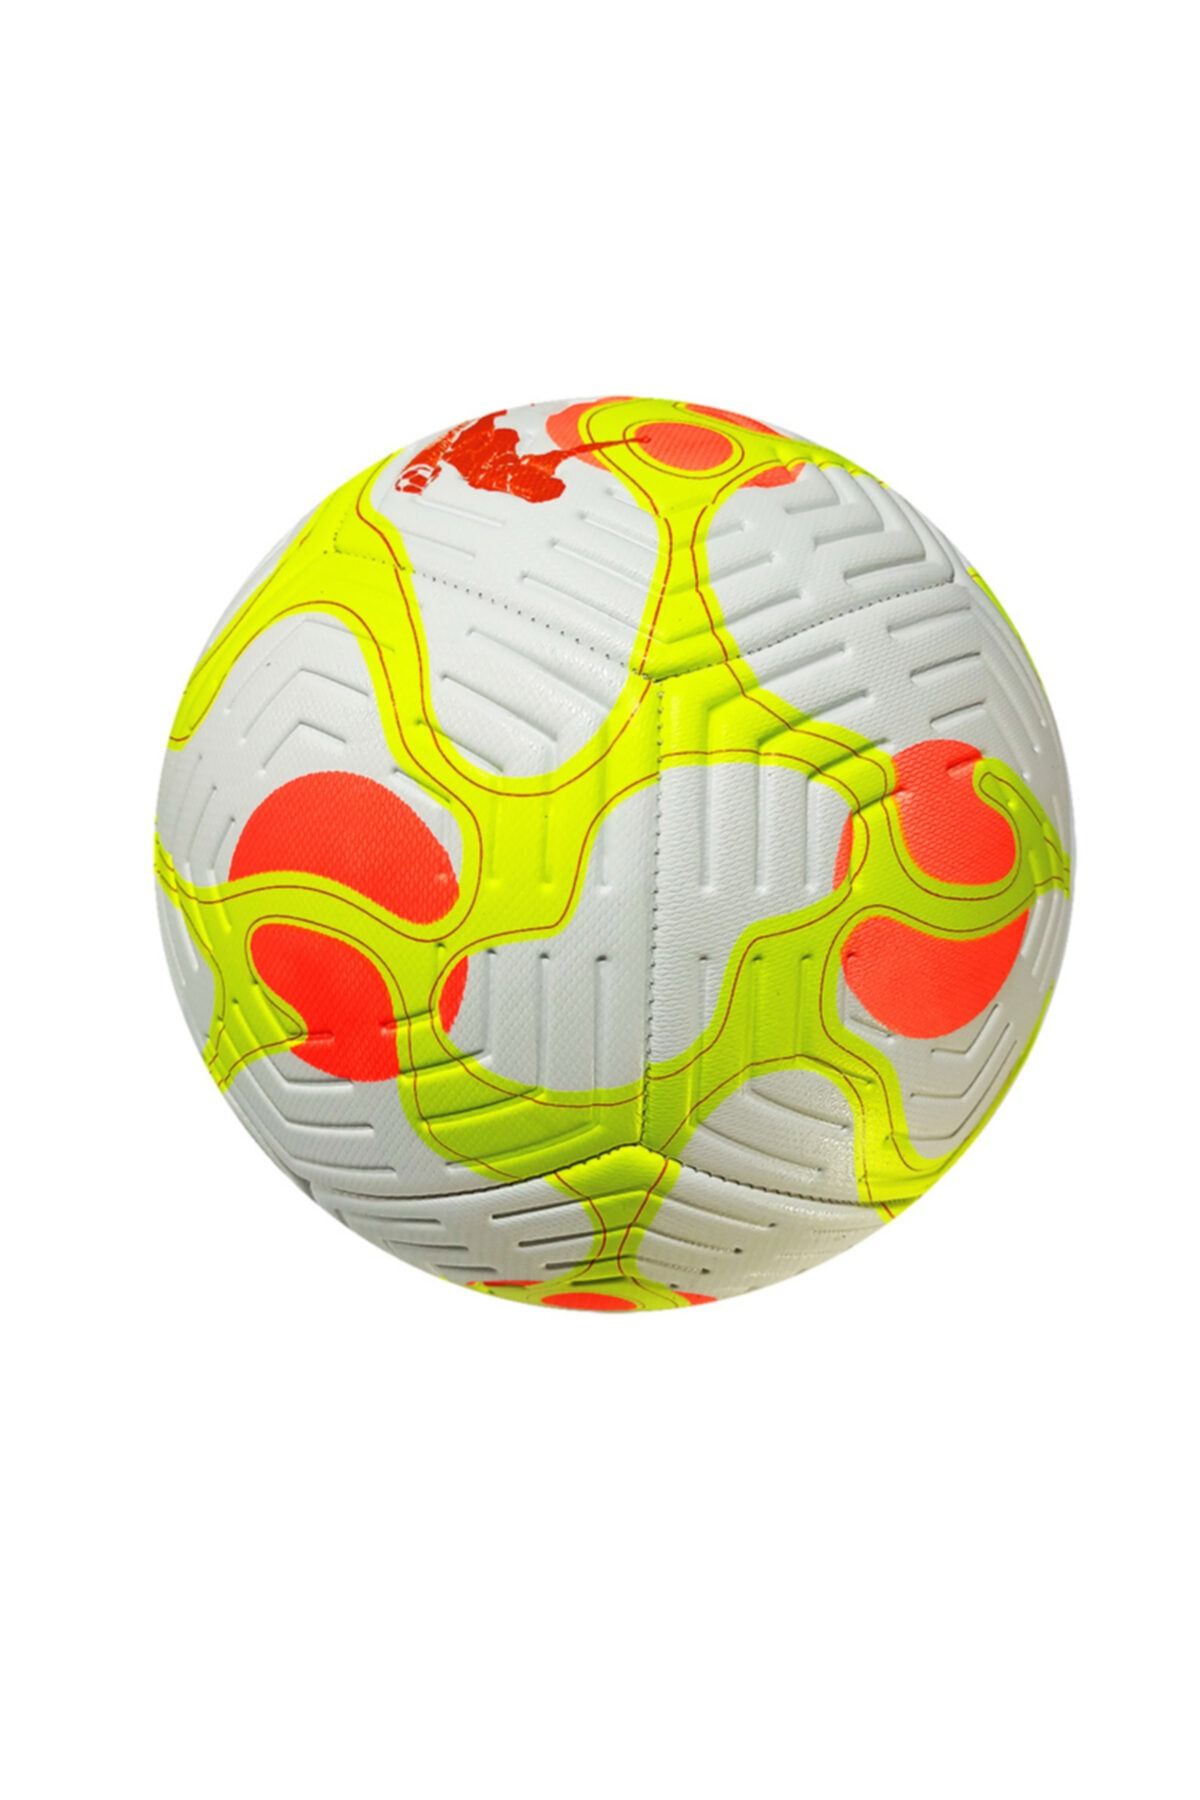 Avessa Futbol Topu Sarı Desenli No:5 Bsf-011